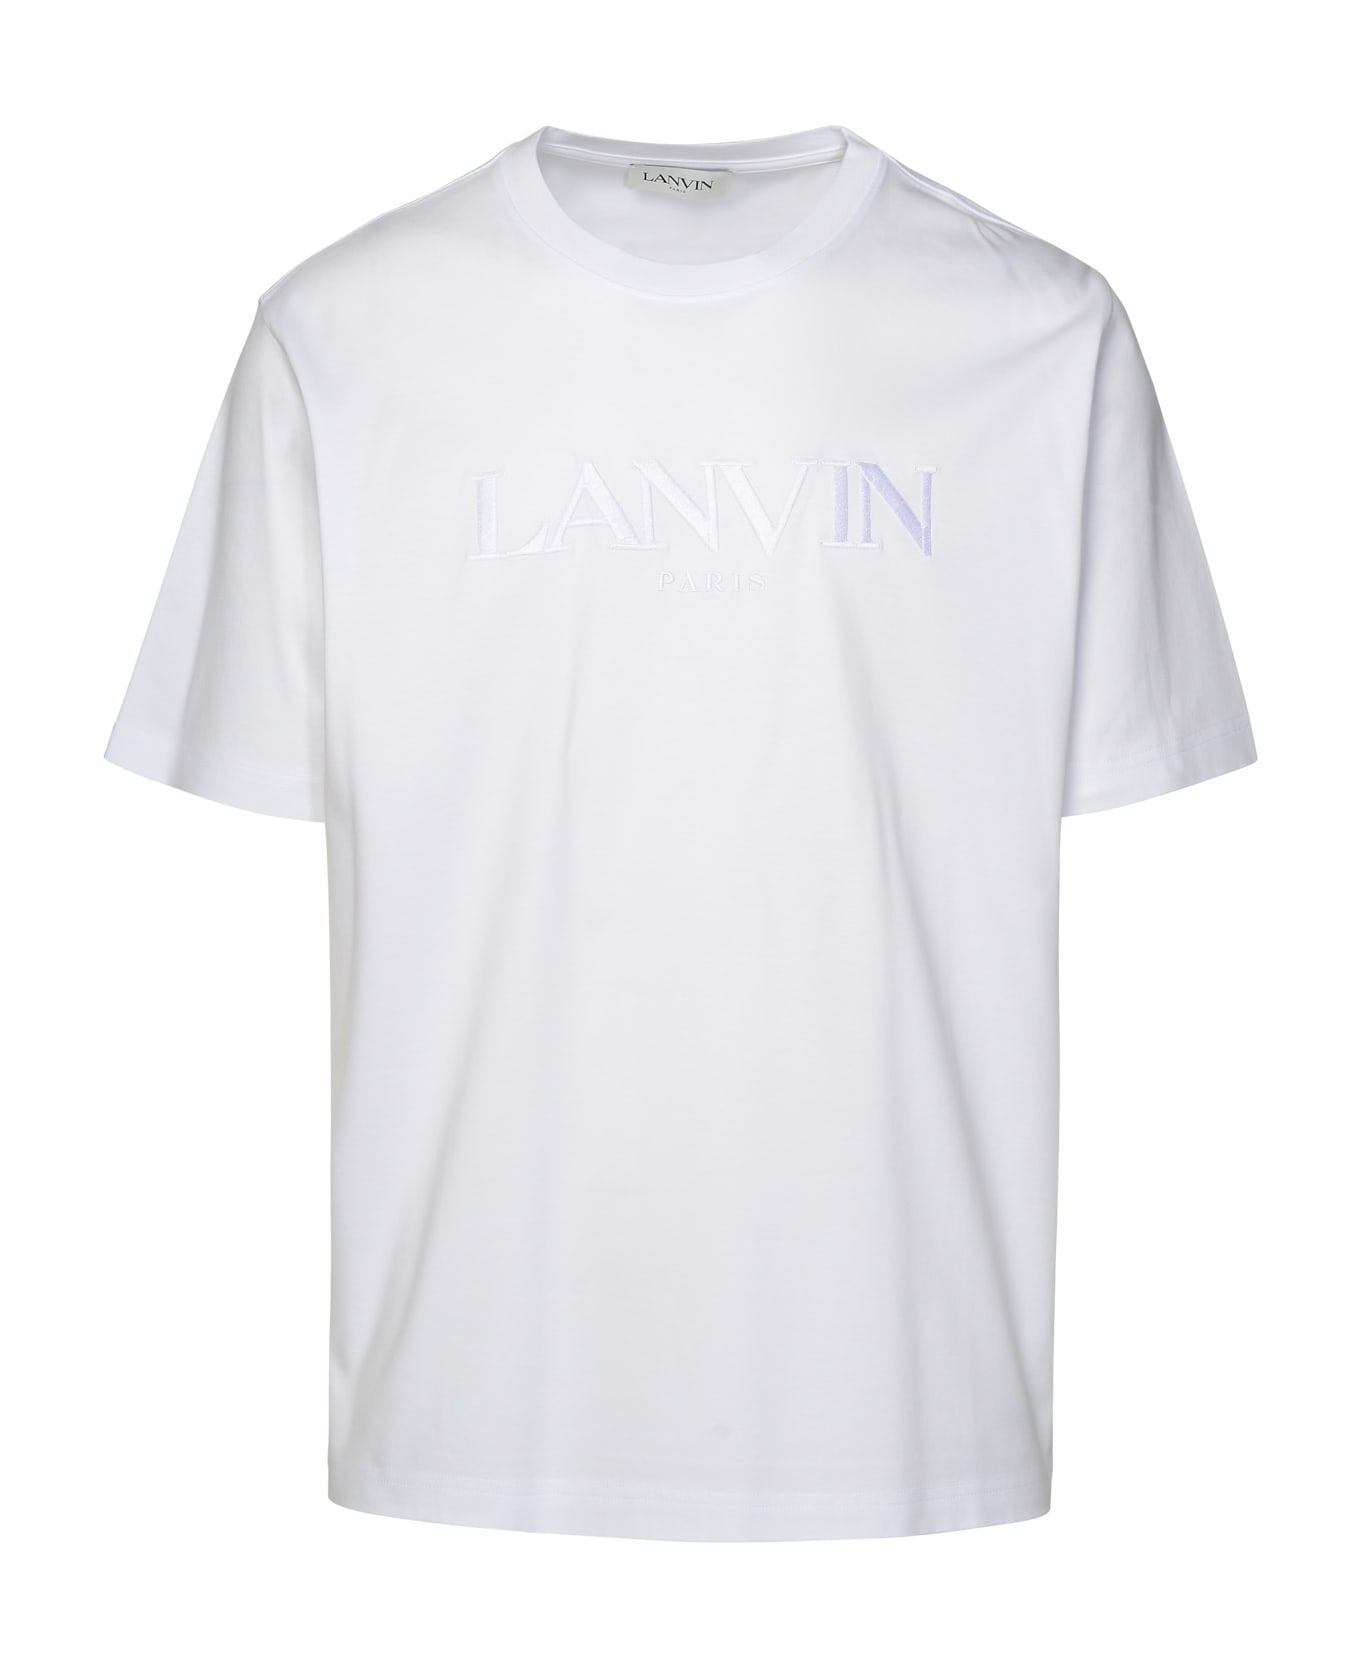 Lanvin White Cotton T-shirt - White